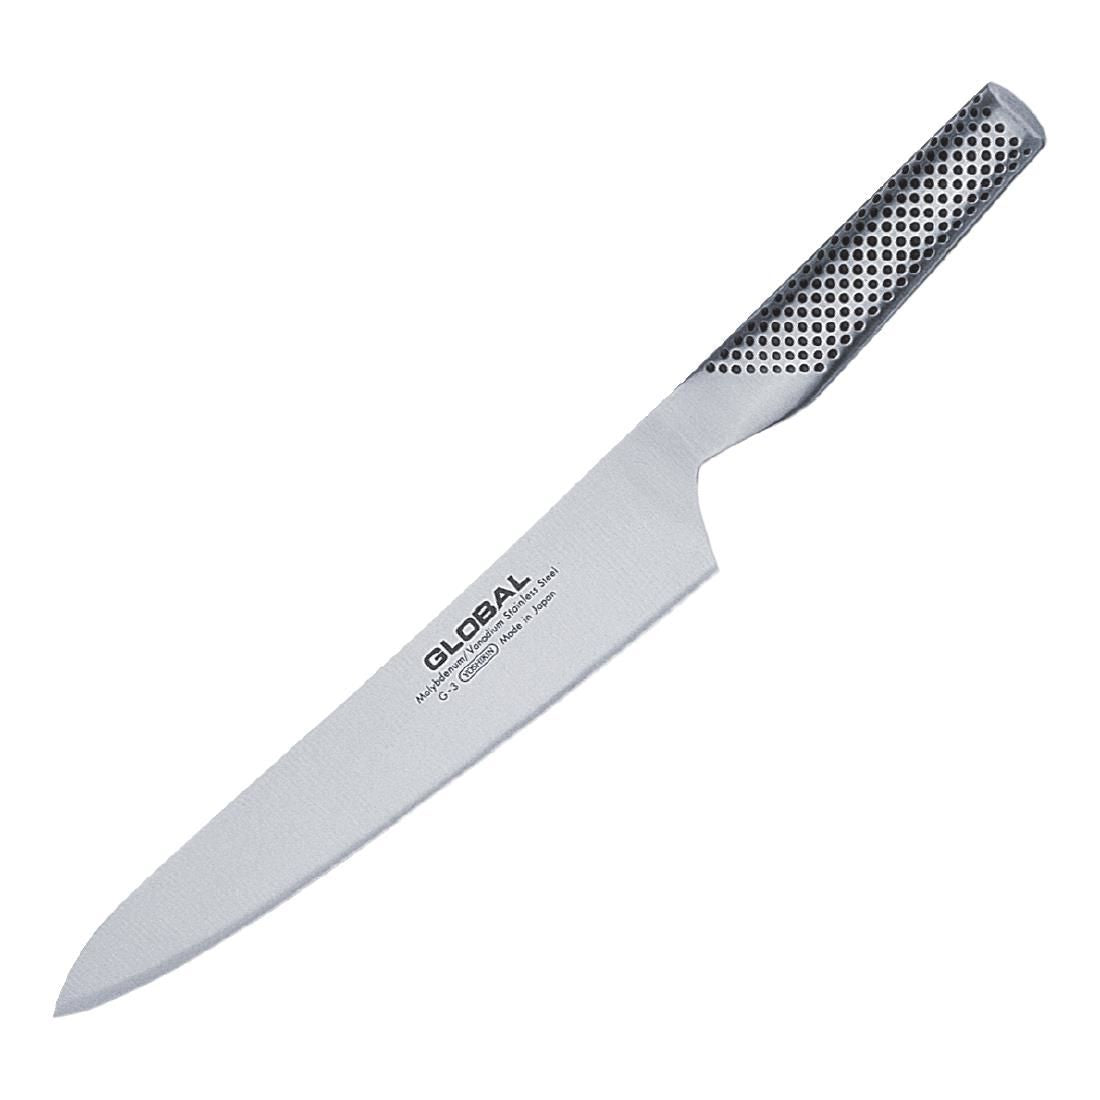 Global G 3 Carving Knife 20.5cm JD Catering Equipment Solutions Ltd